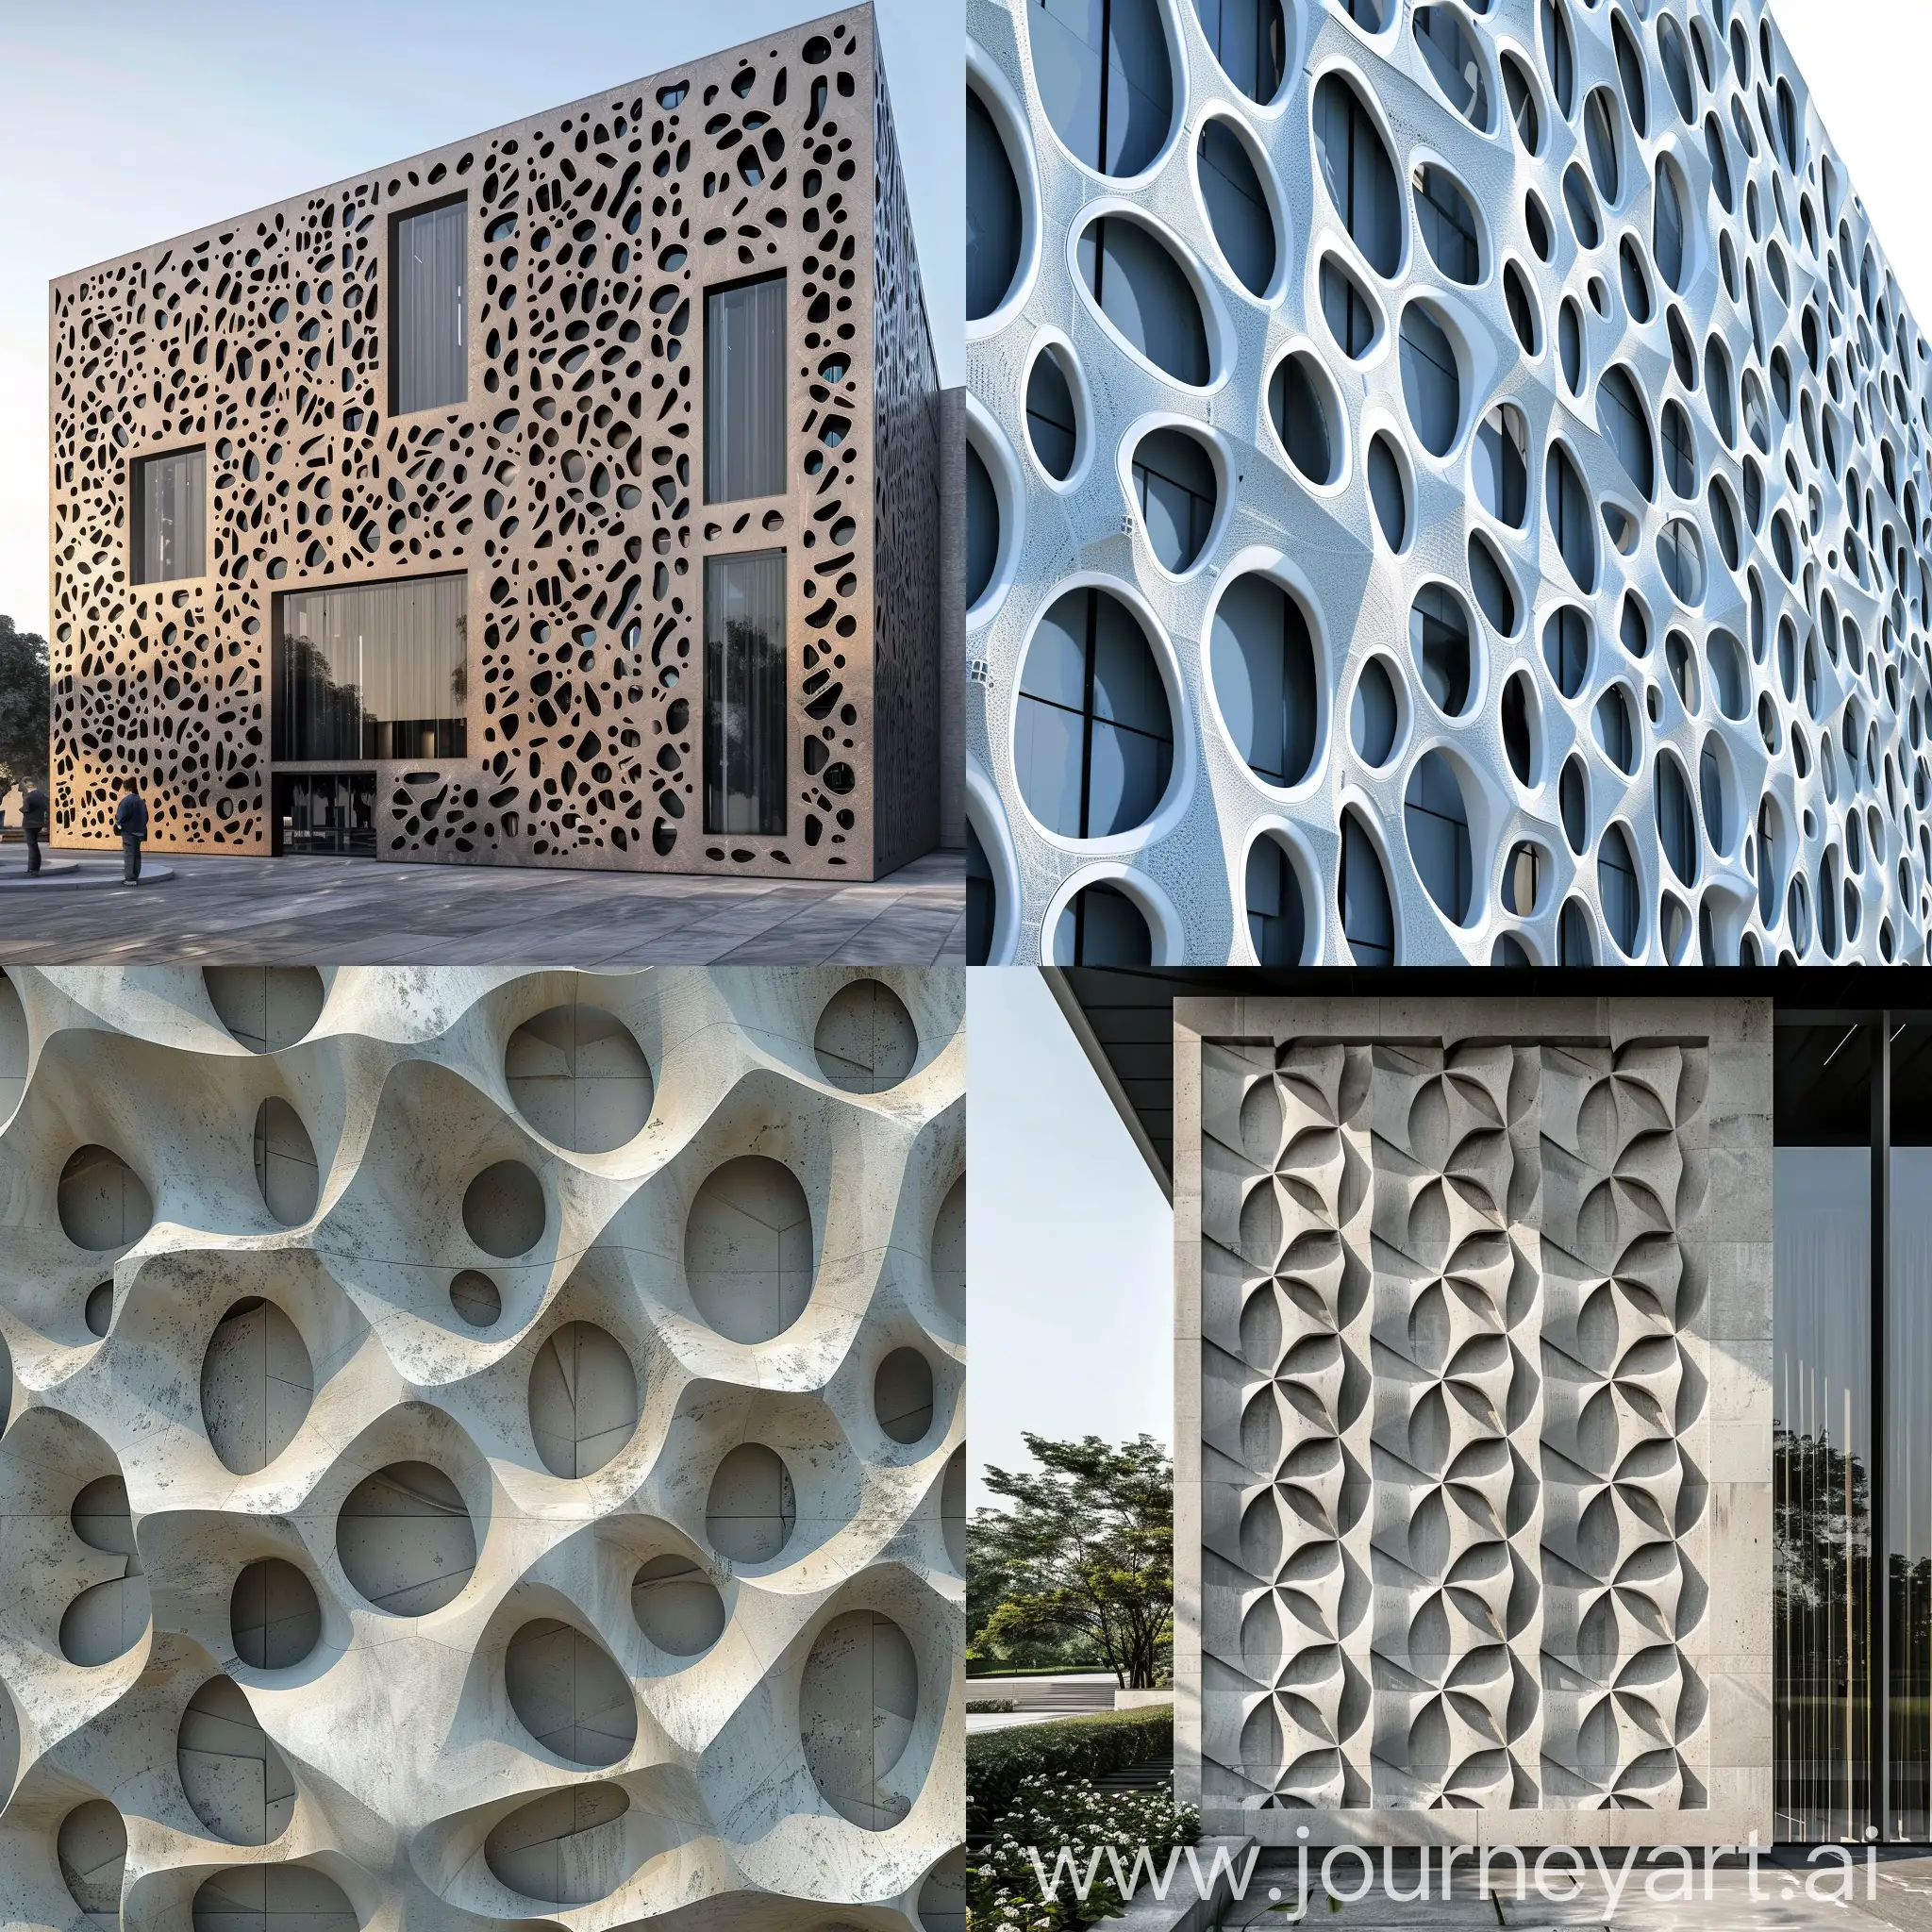 Futuristic-Parametric-Architecture-Intricate-Facade-Panels-Design